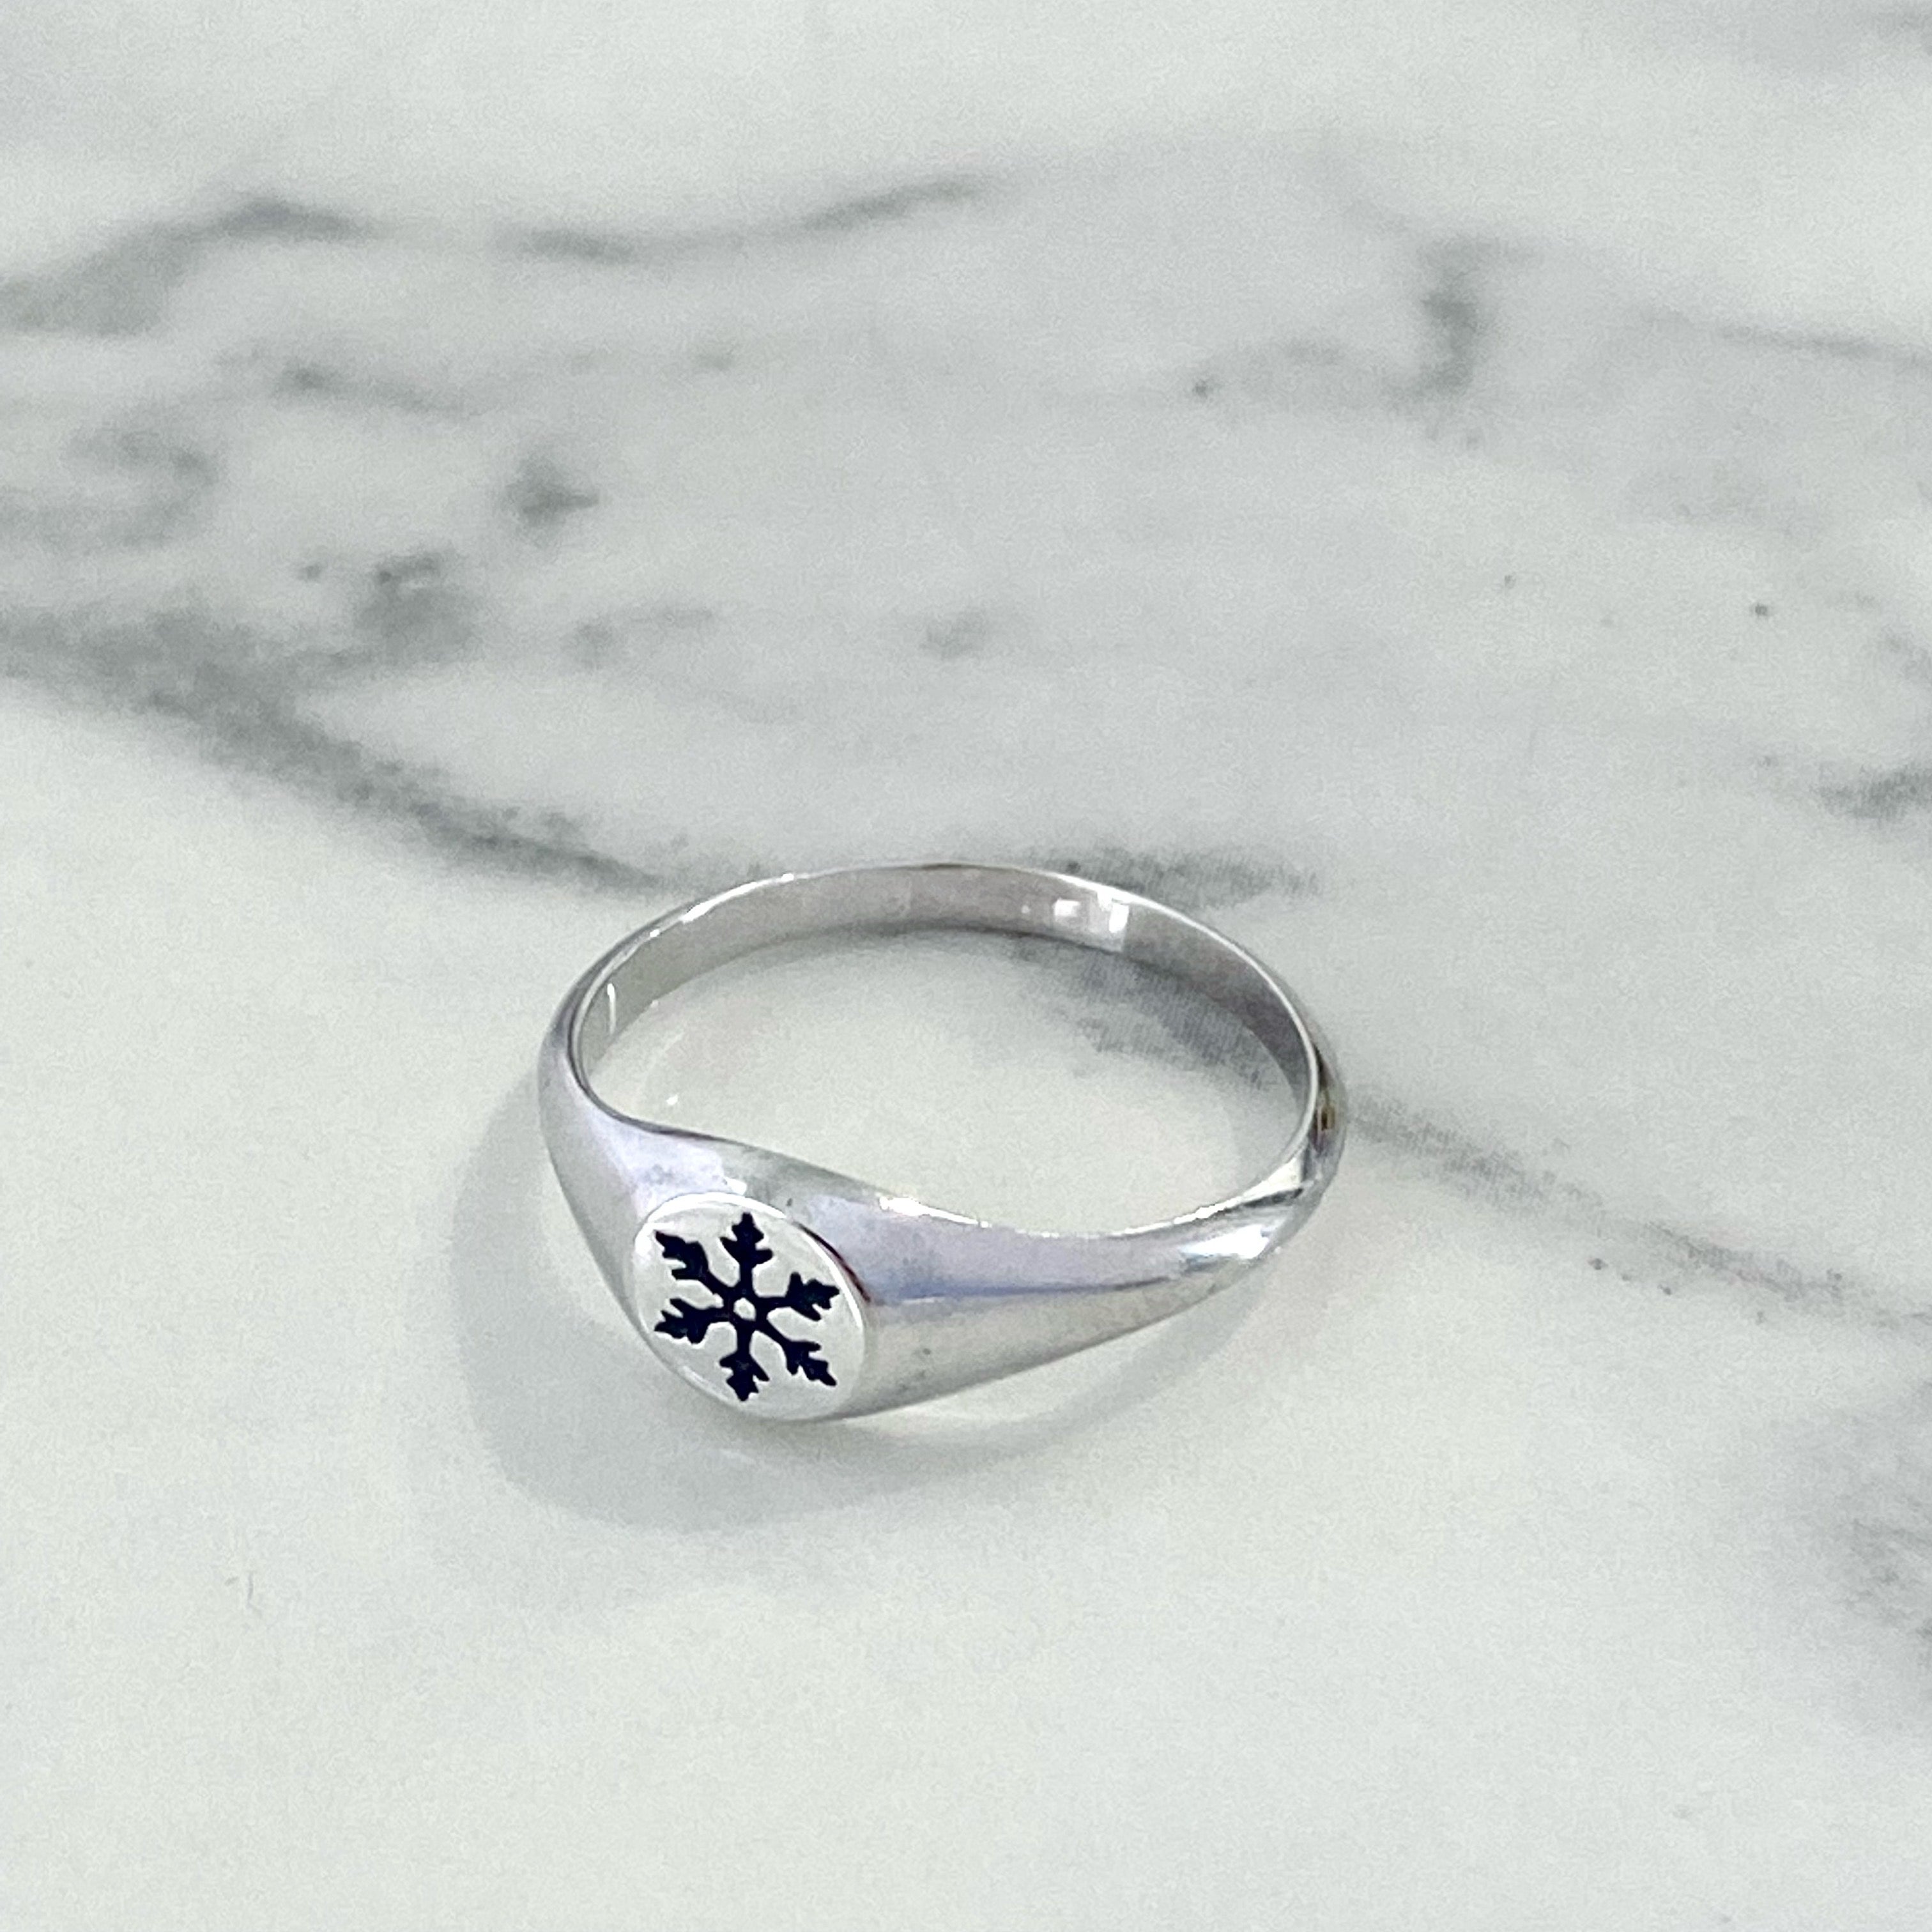 Silver Snowflake Signet Ring with Black Enamel